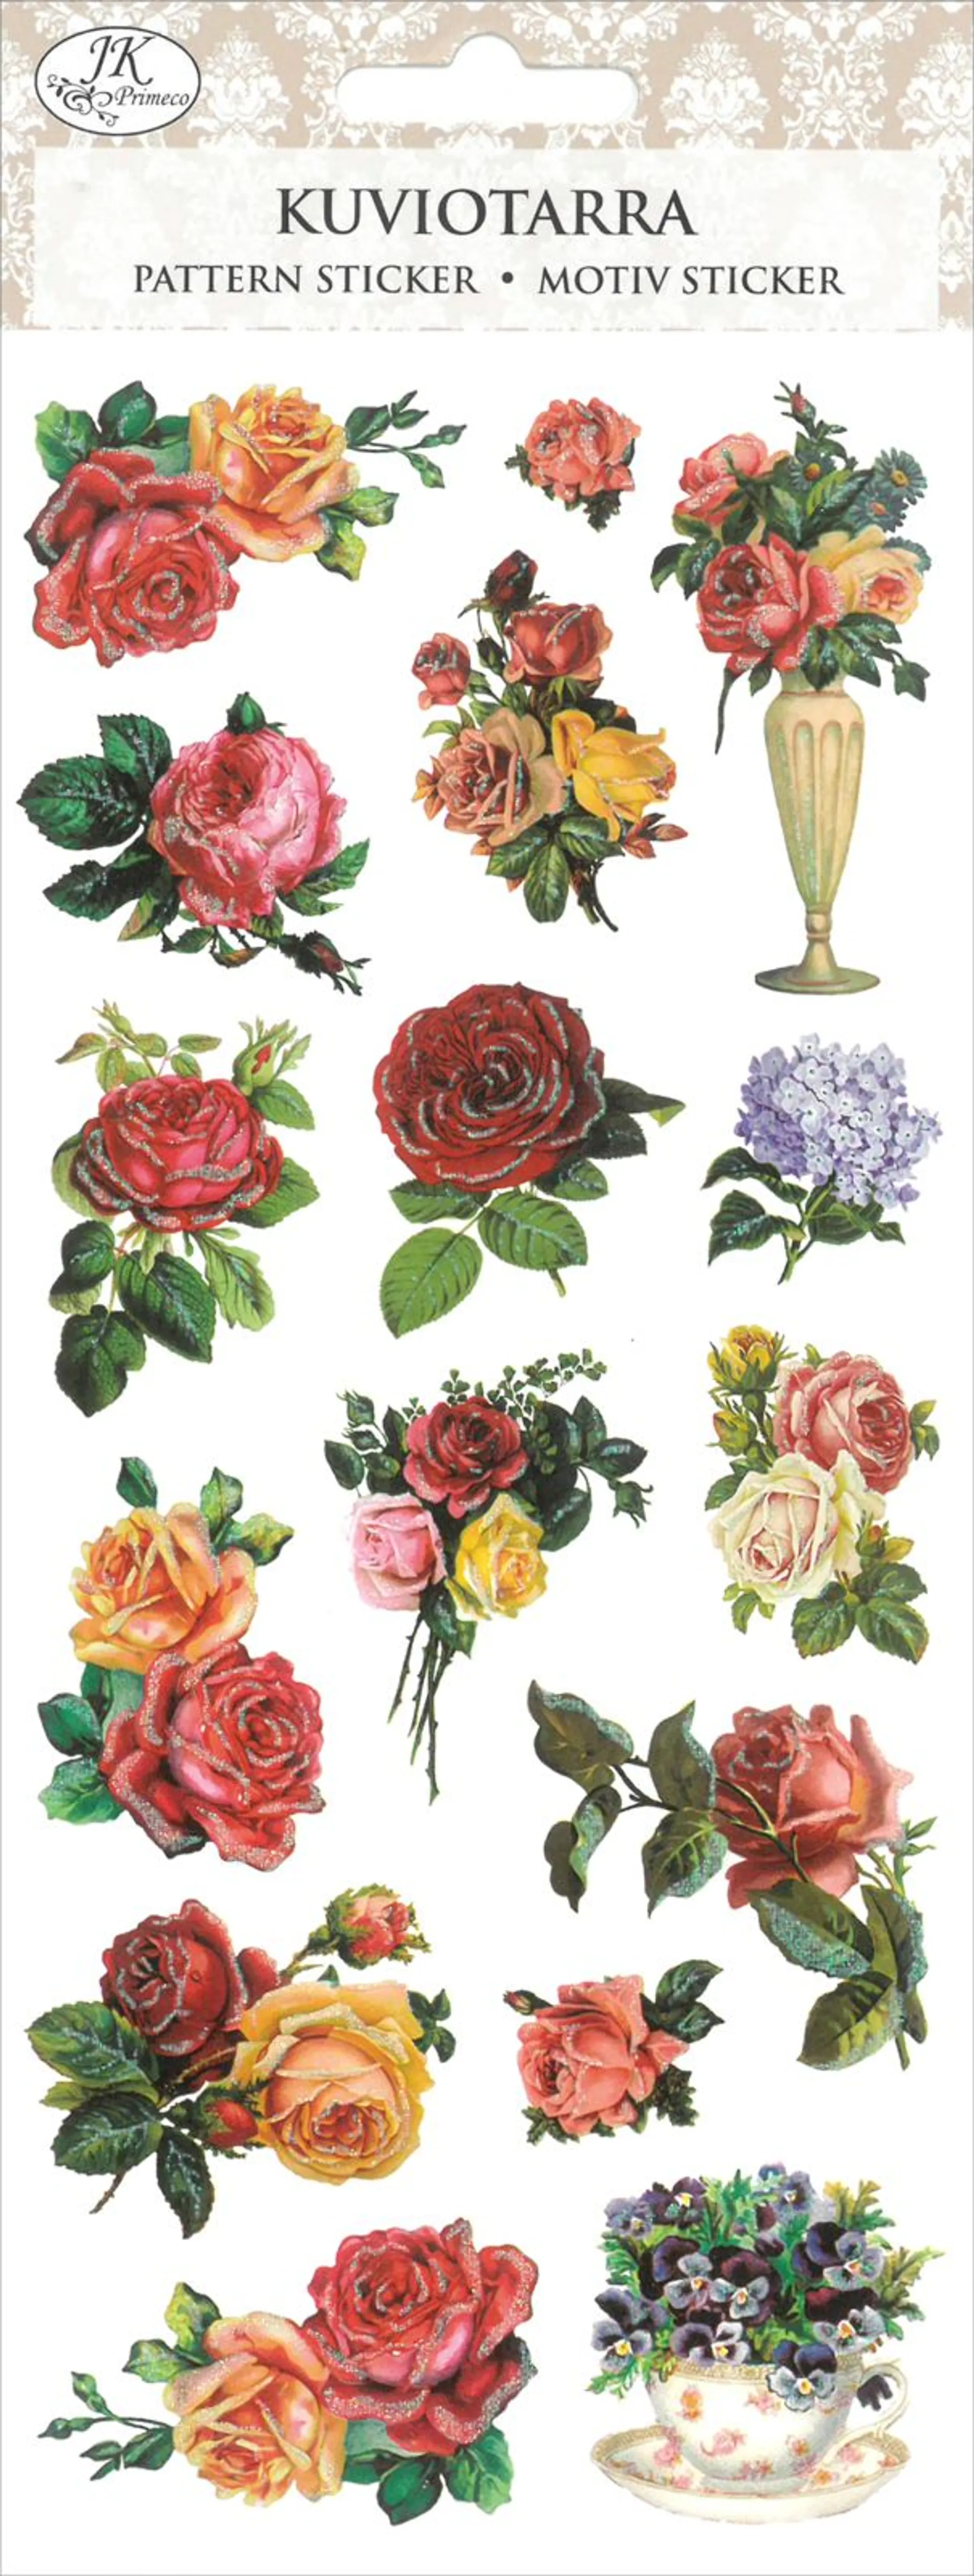 J.K. Primeco kuviotarra Ruusut vintage